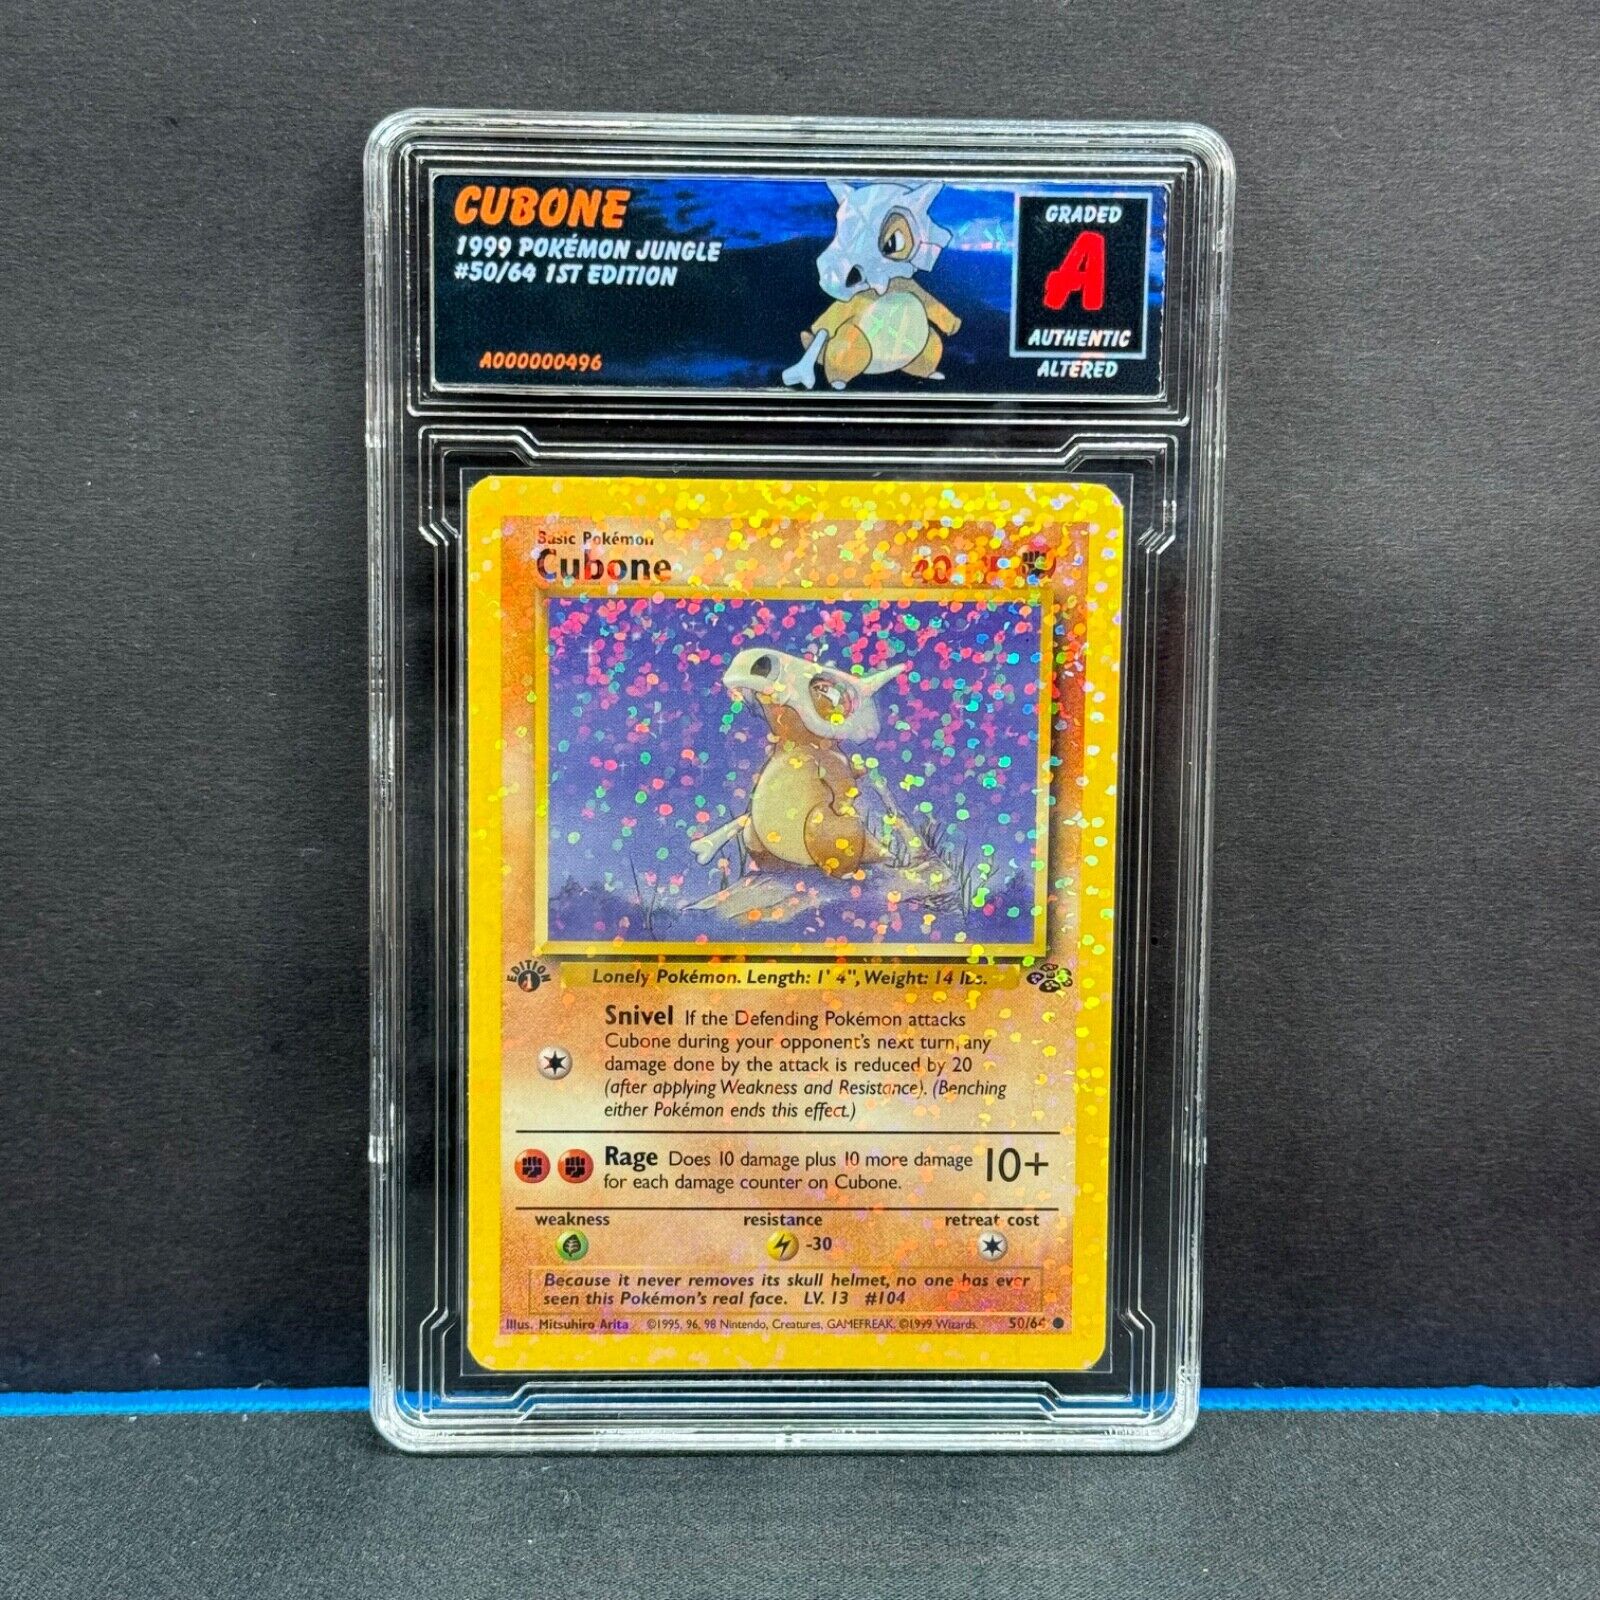 1999 Pokémon Jungle Cubone #50/64 1st Edition Altered Sparkle Holo RazorSlabs 